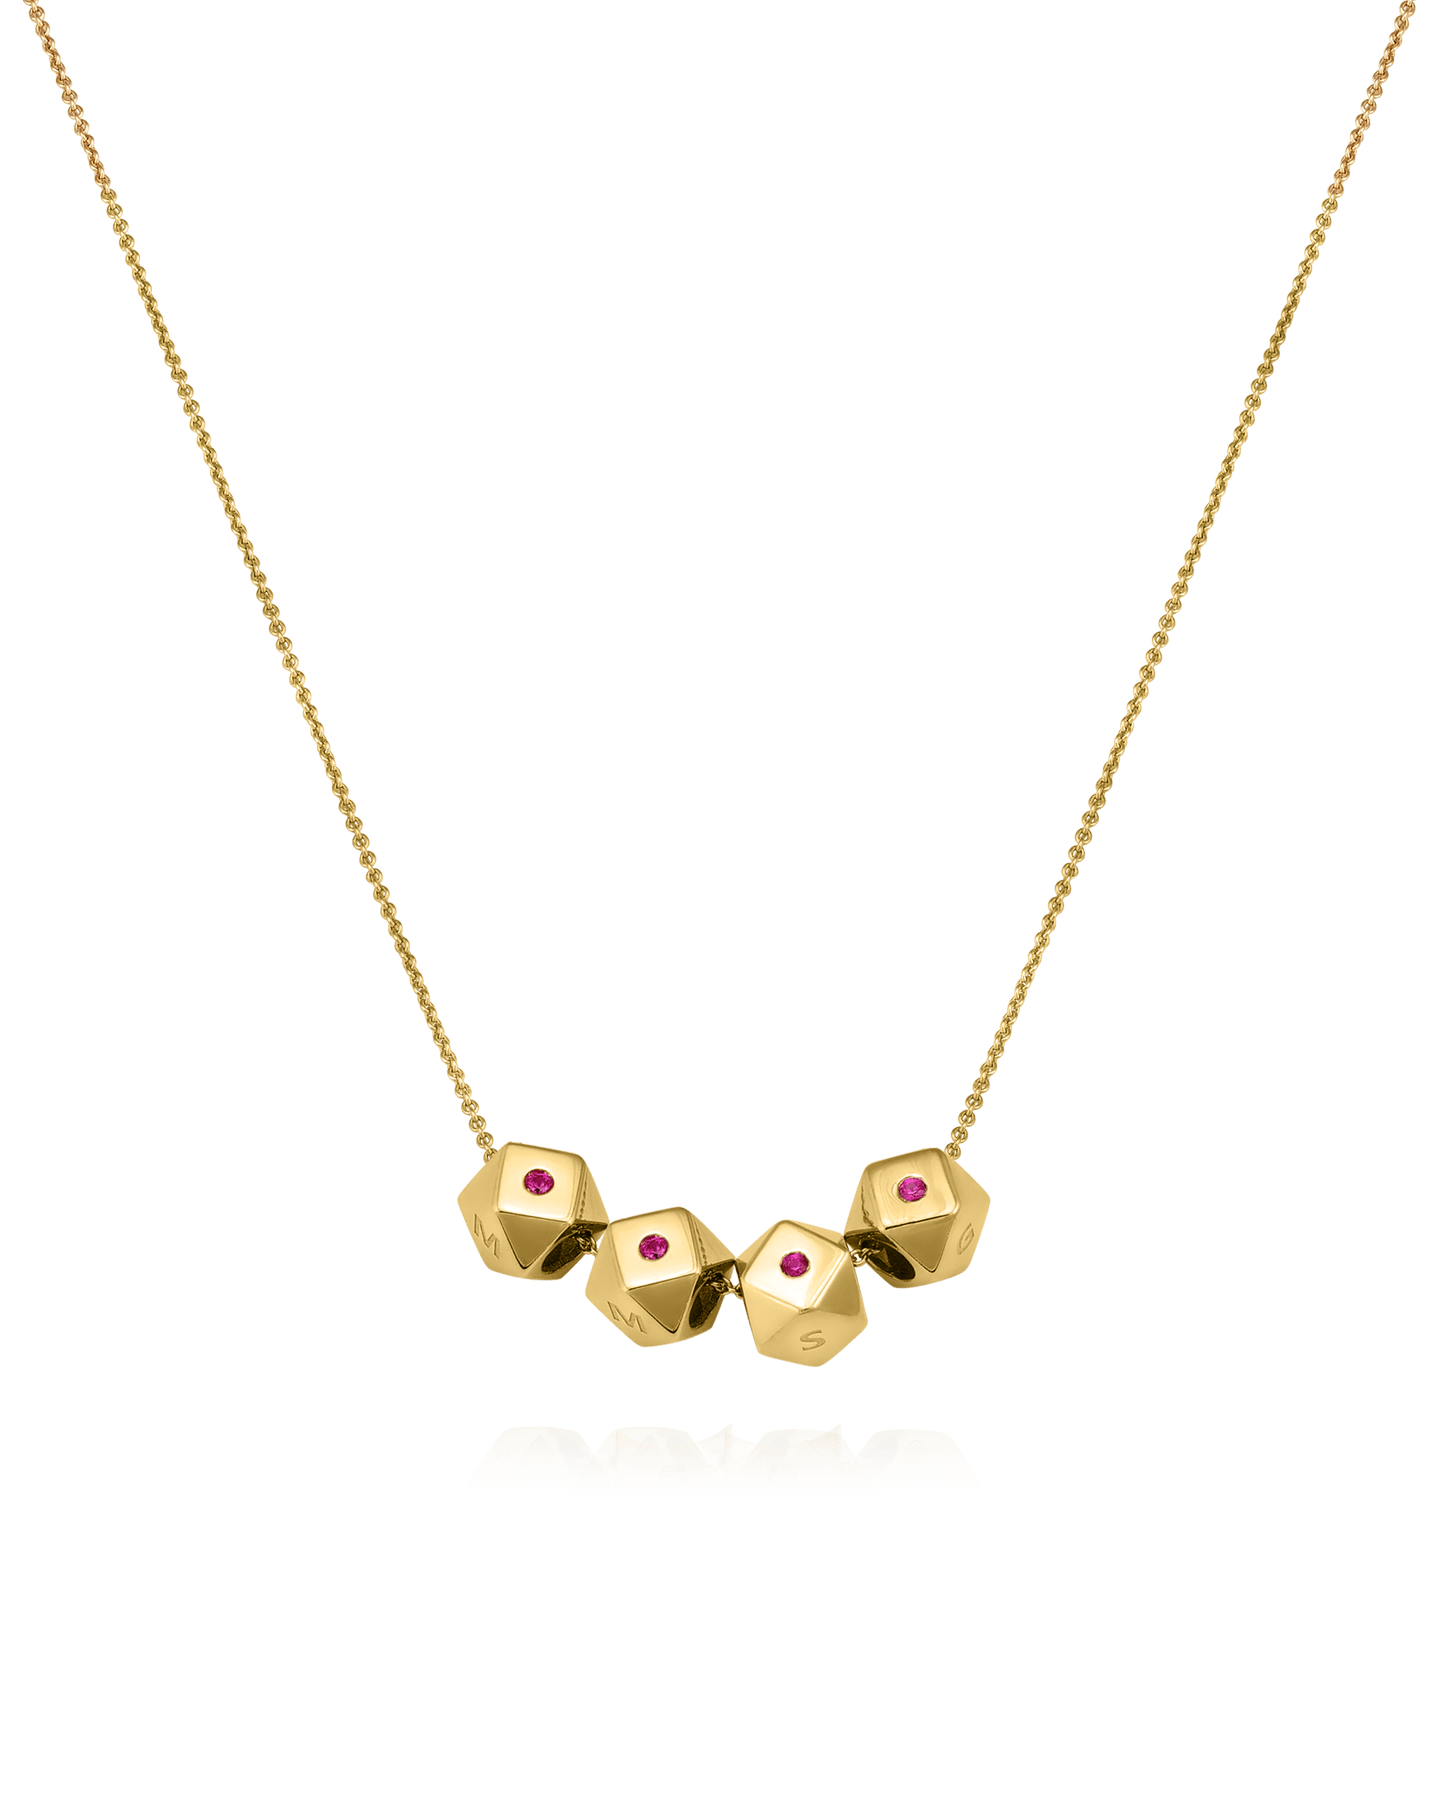 Hedra Necklace - 18K Gold Vermeil Necklaces magal-dev 4 Charms 16”+2” extender 